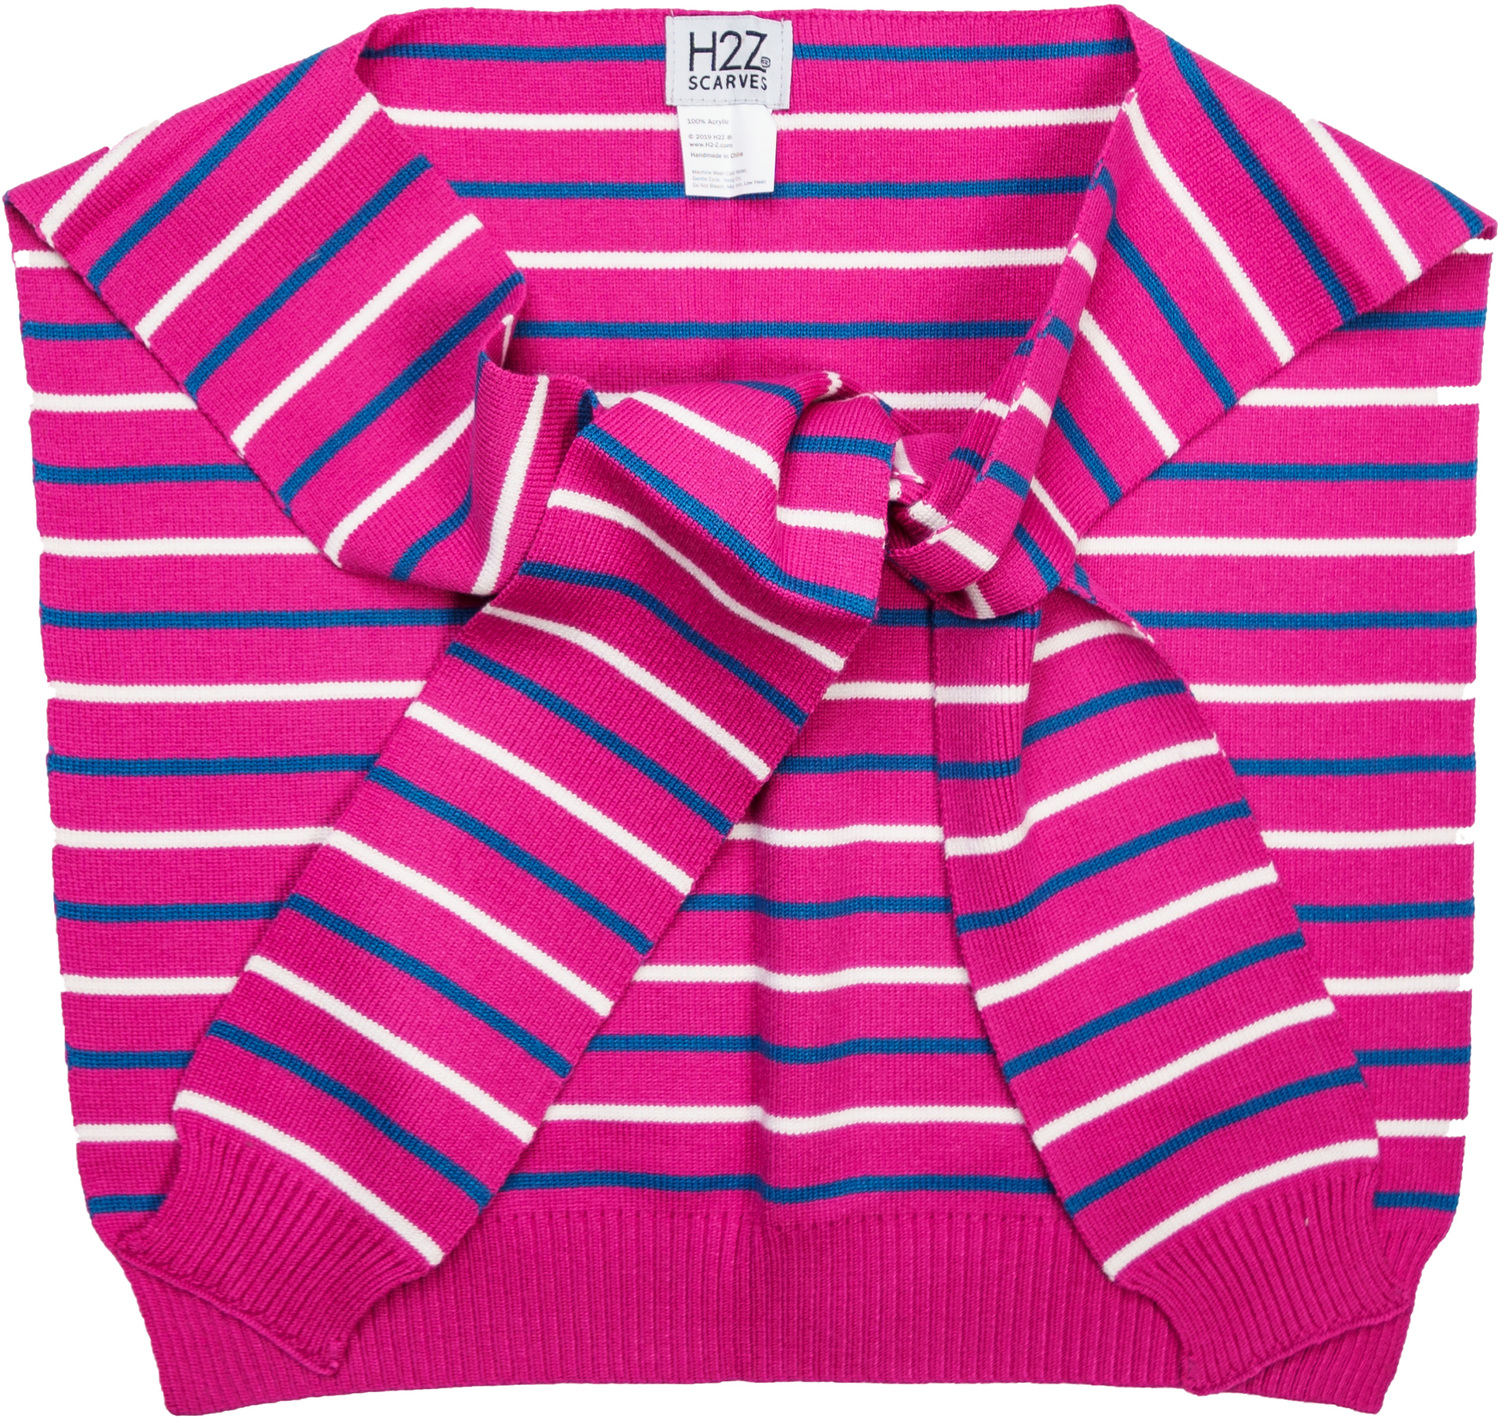 Sunrise Stripes by H2Z Scarves - Sunrise Stripes - 17" x 41" Faux Sweater Scarf